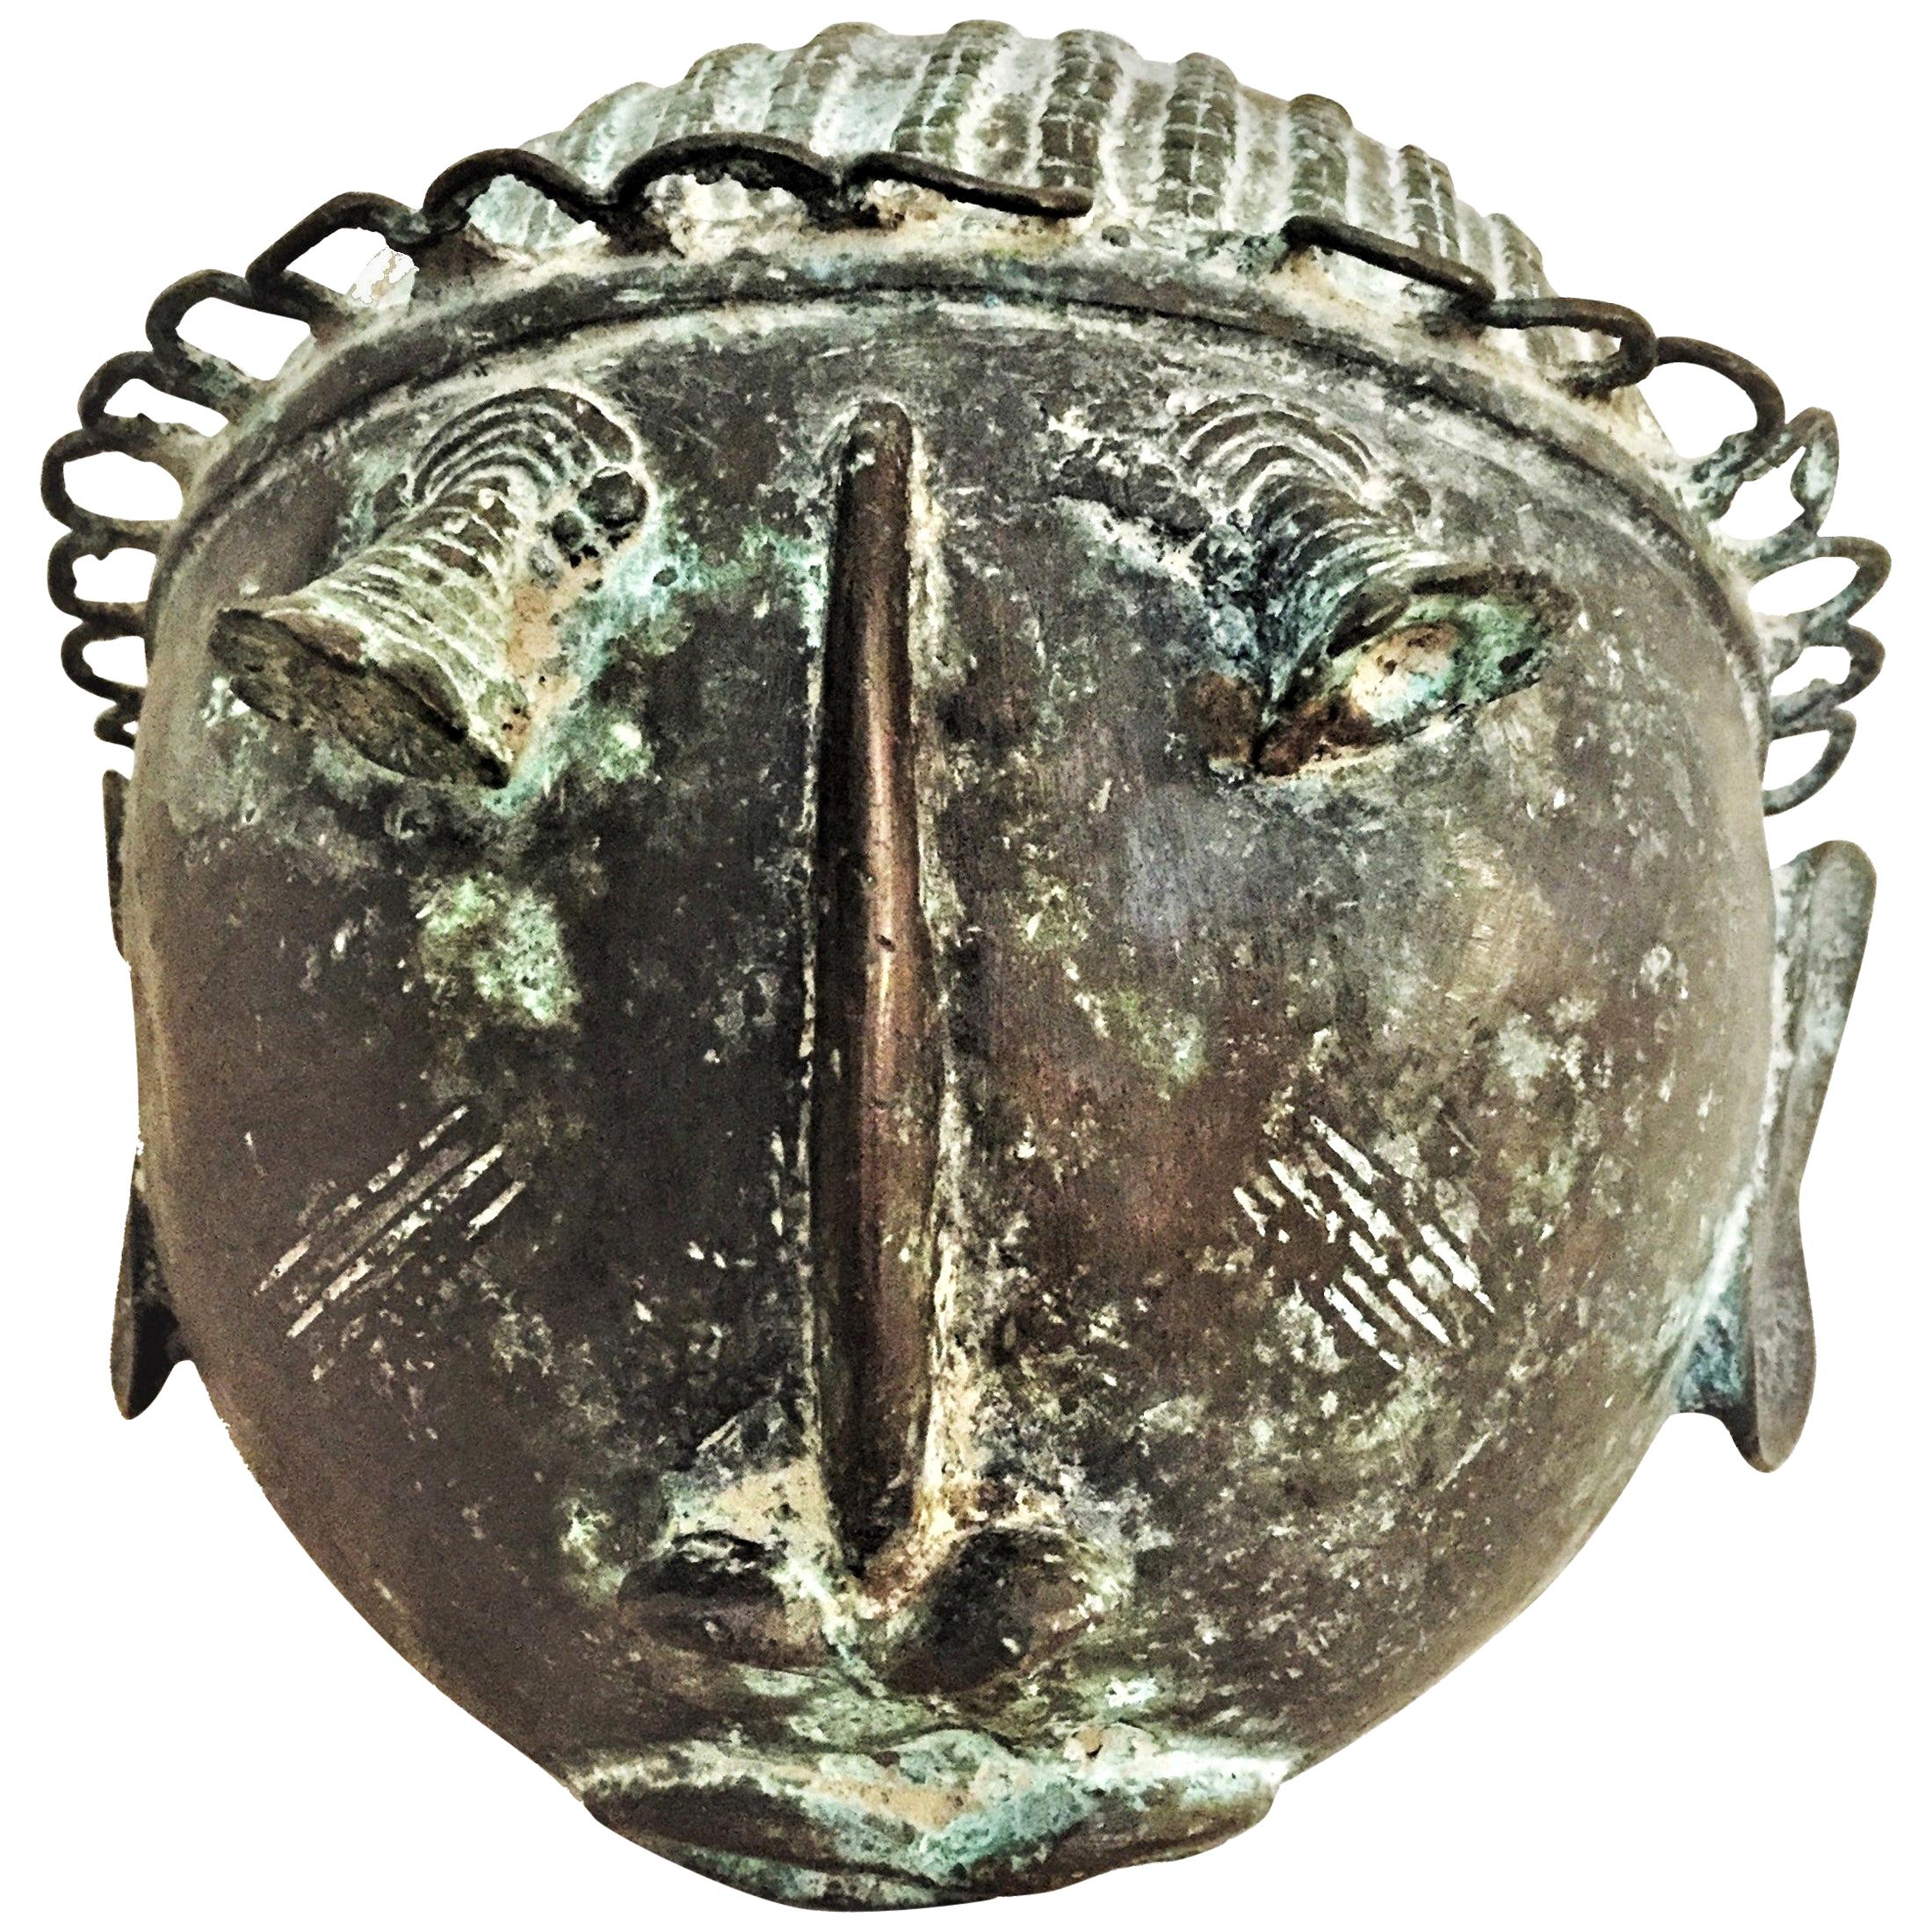 Maschera rituale africana in bronzo ossidato, periodo Art Déco, anni '20 in vendita